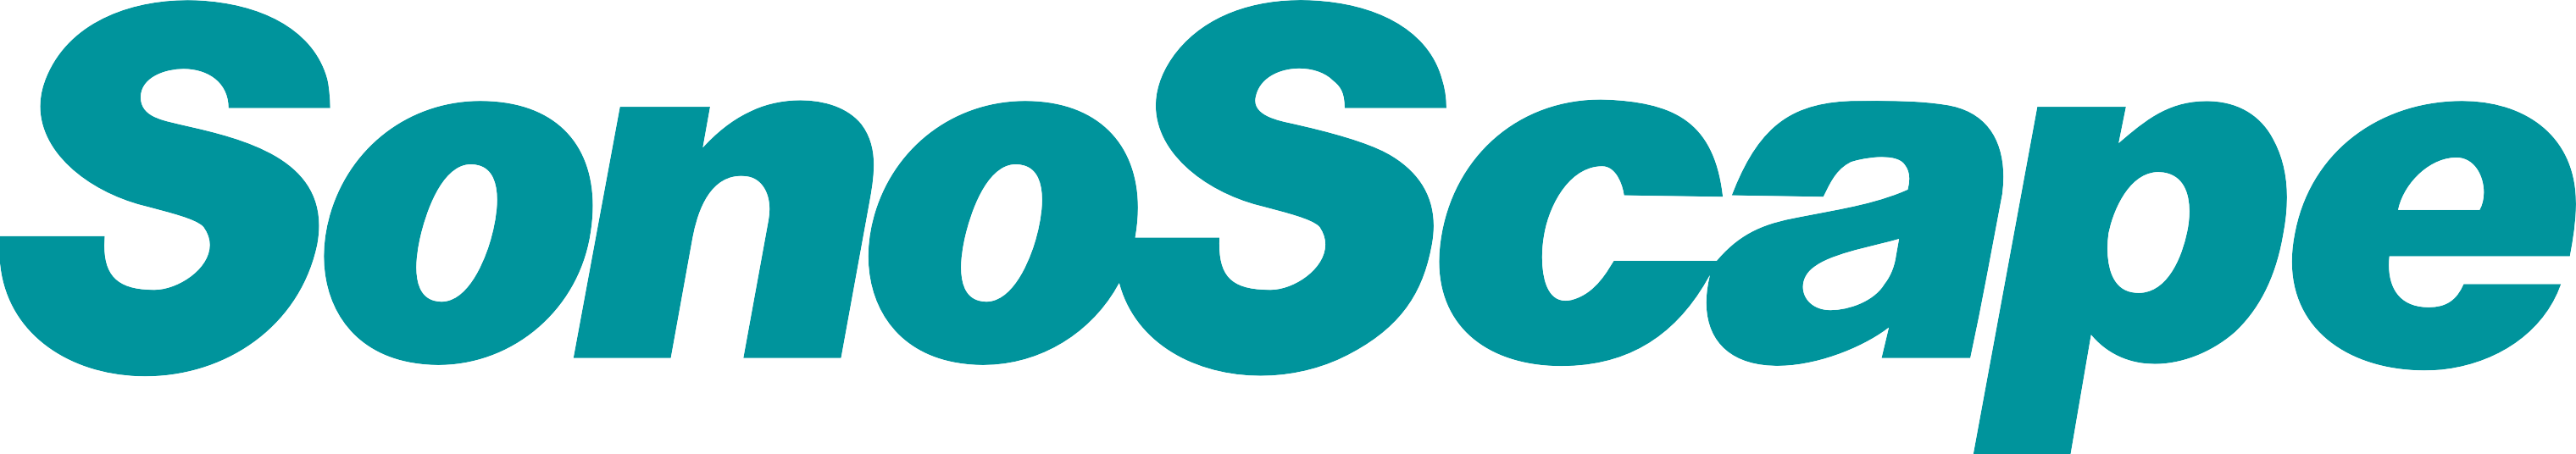 Sonoscope logo